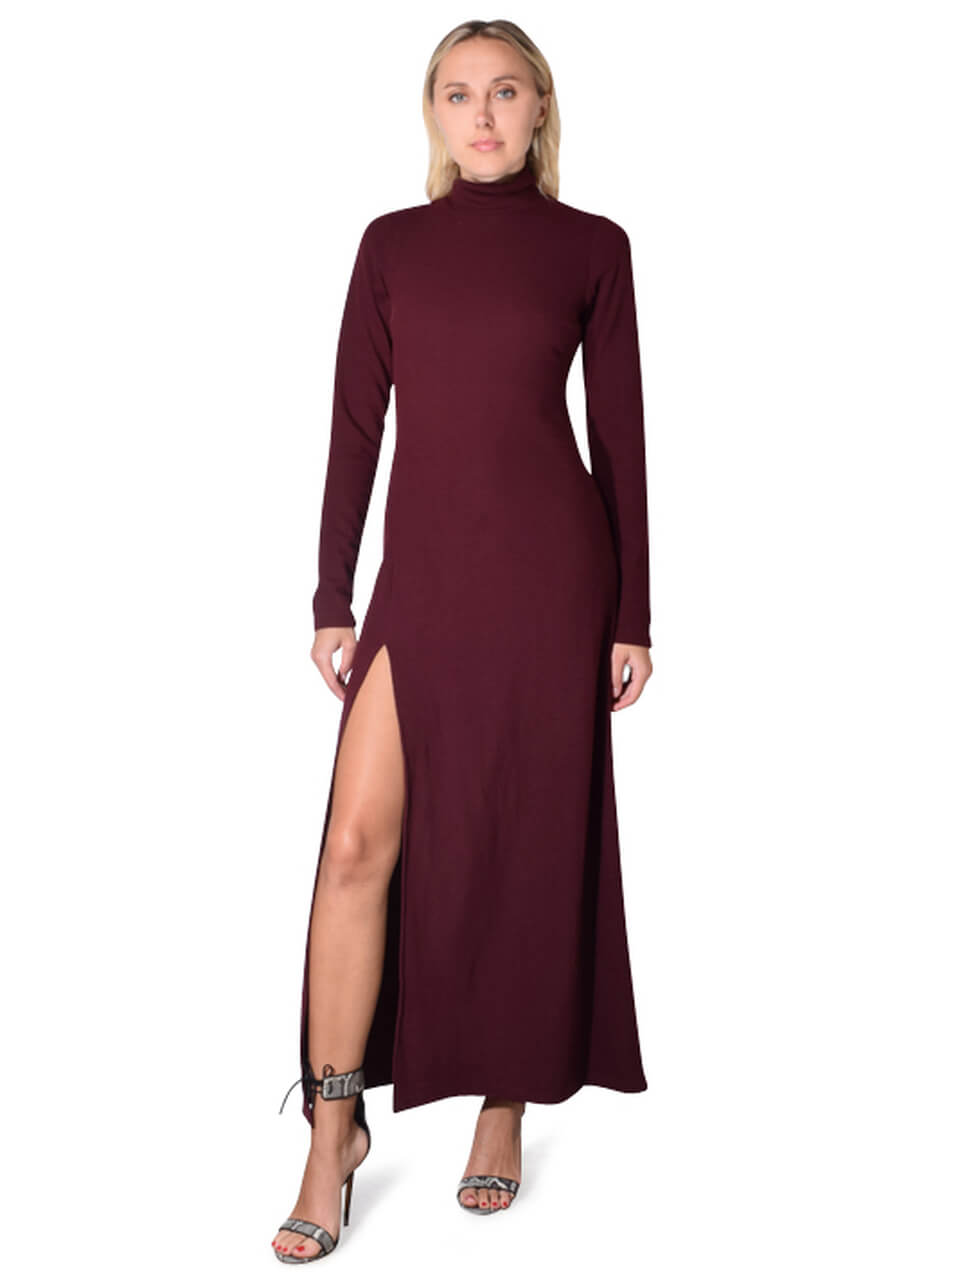 https://bleuclothing.com/new-arrivals/kia-maxi-dress-in-dark-plum/